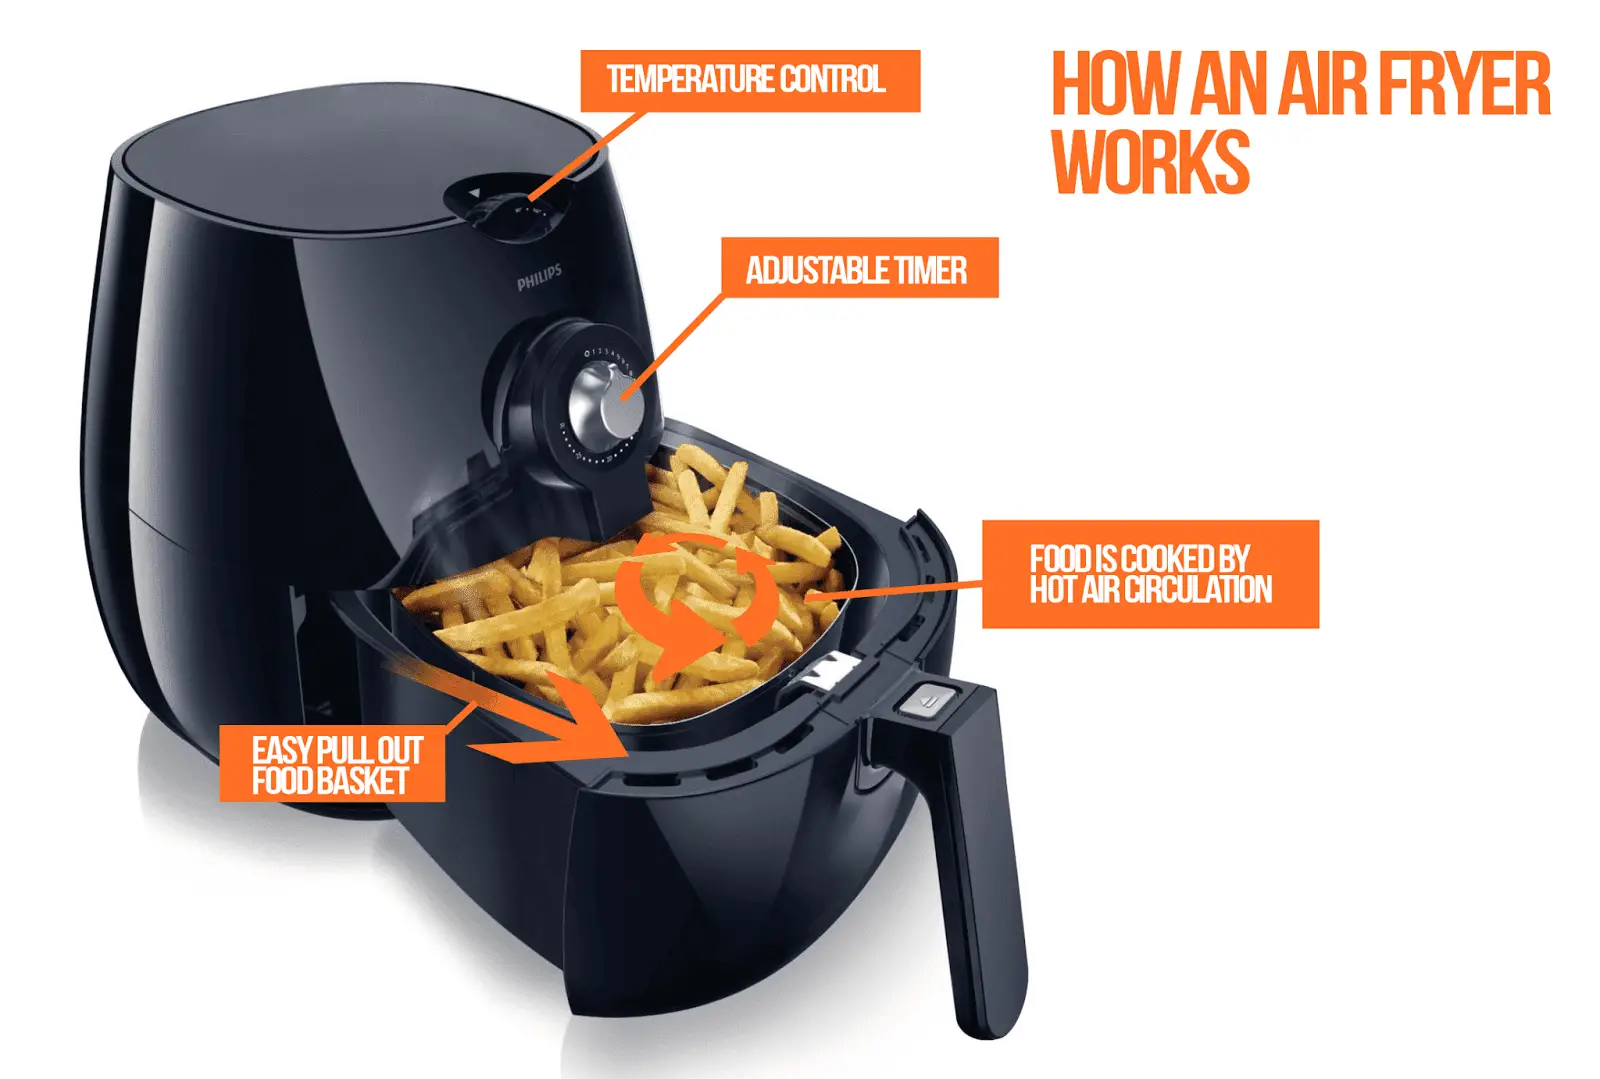 Top 6 Health Benefits of Air Fryer Cooking